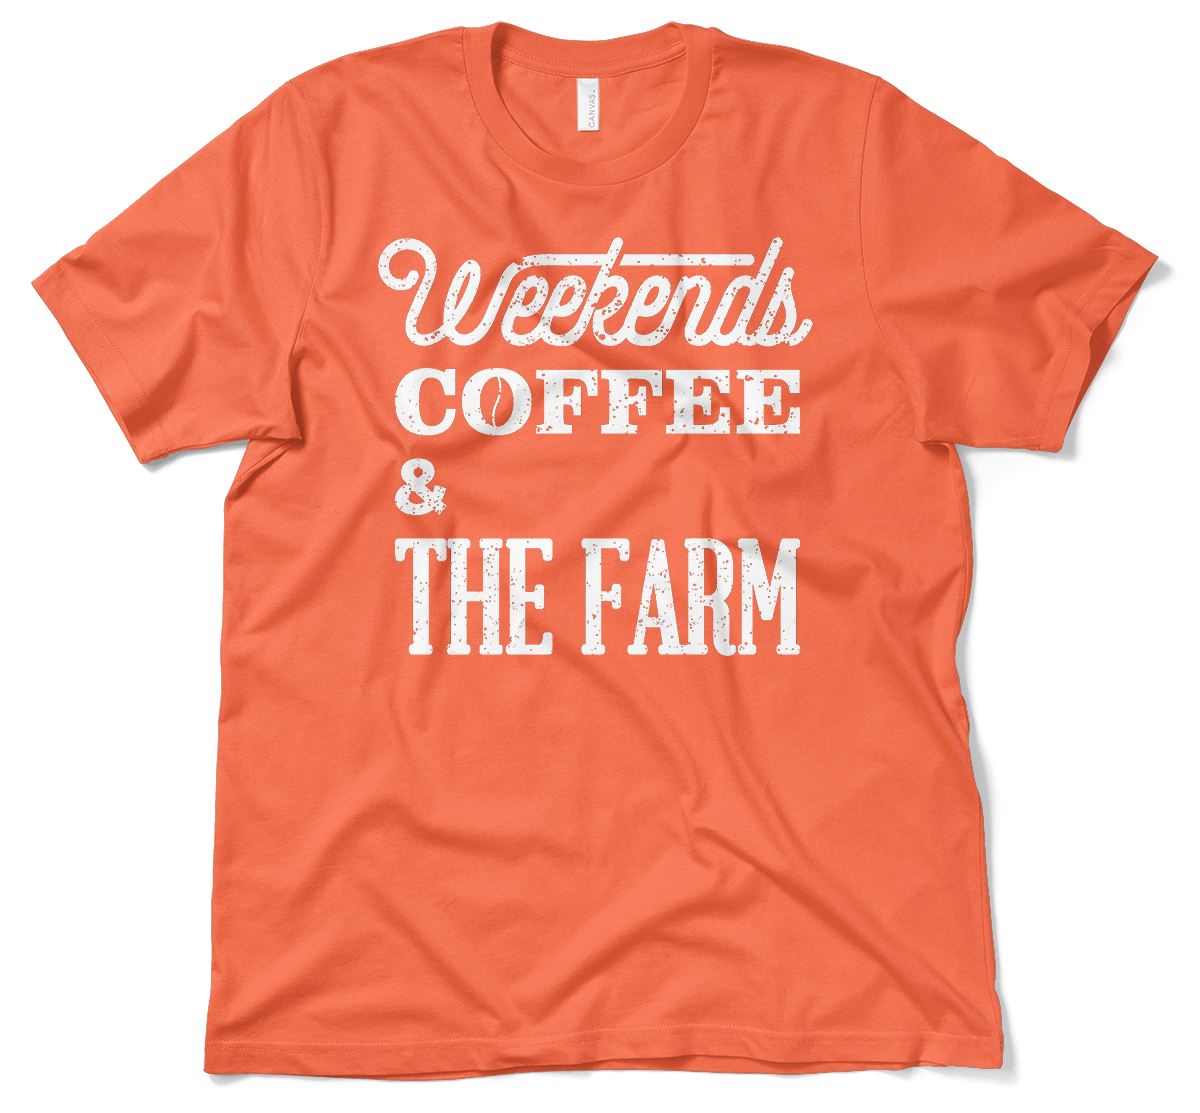 Weekends, Coffee, & The Farm